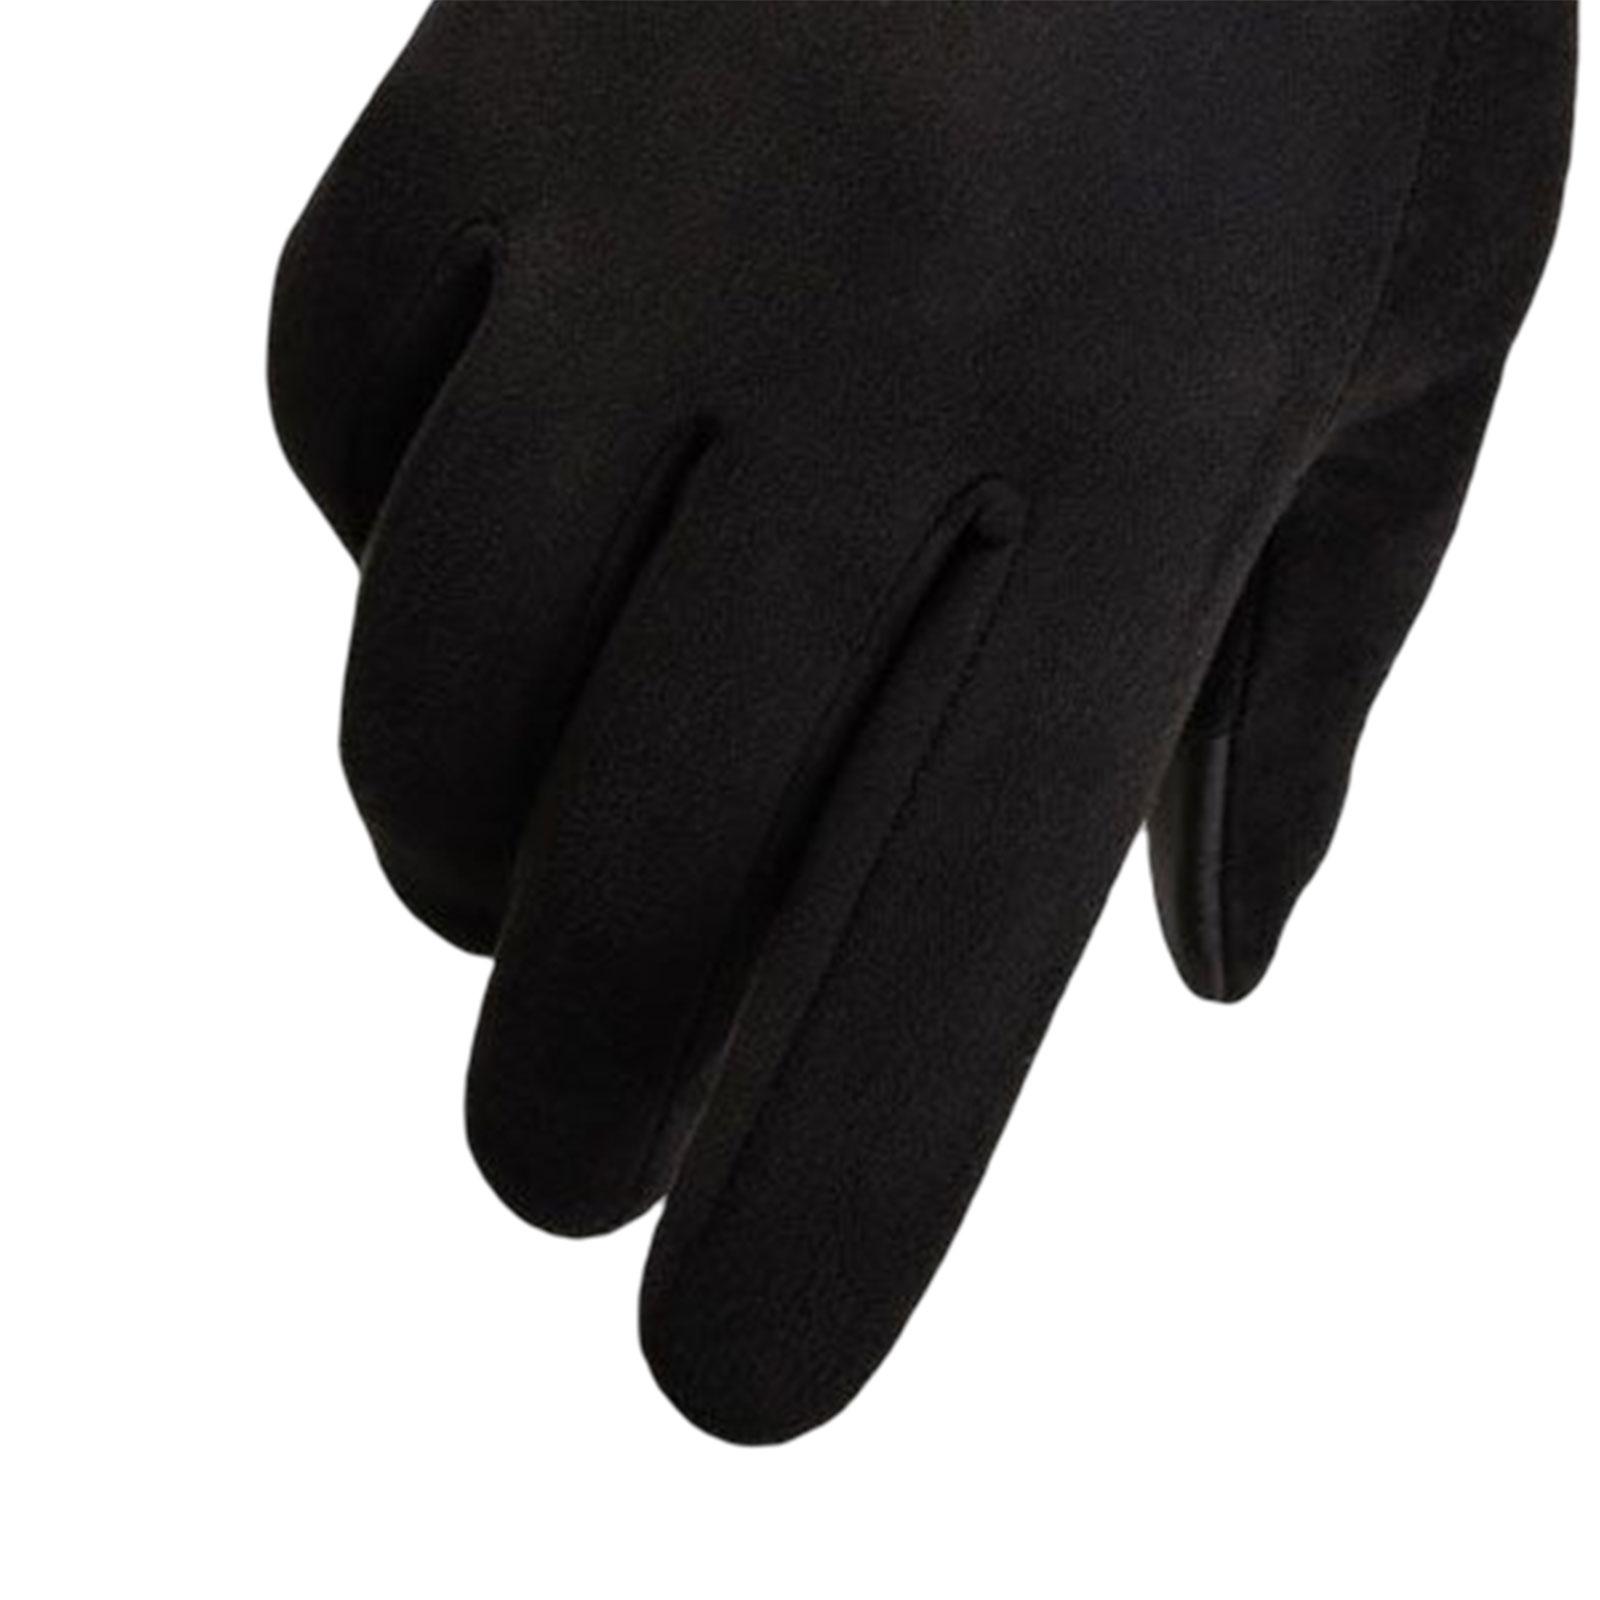 Winter Warm Sports Gloves Suede Anti Slip for Running Skating Cold Weather Women Black